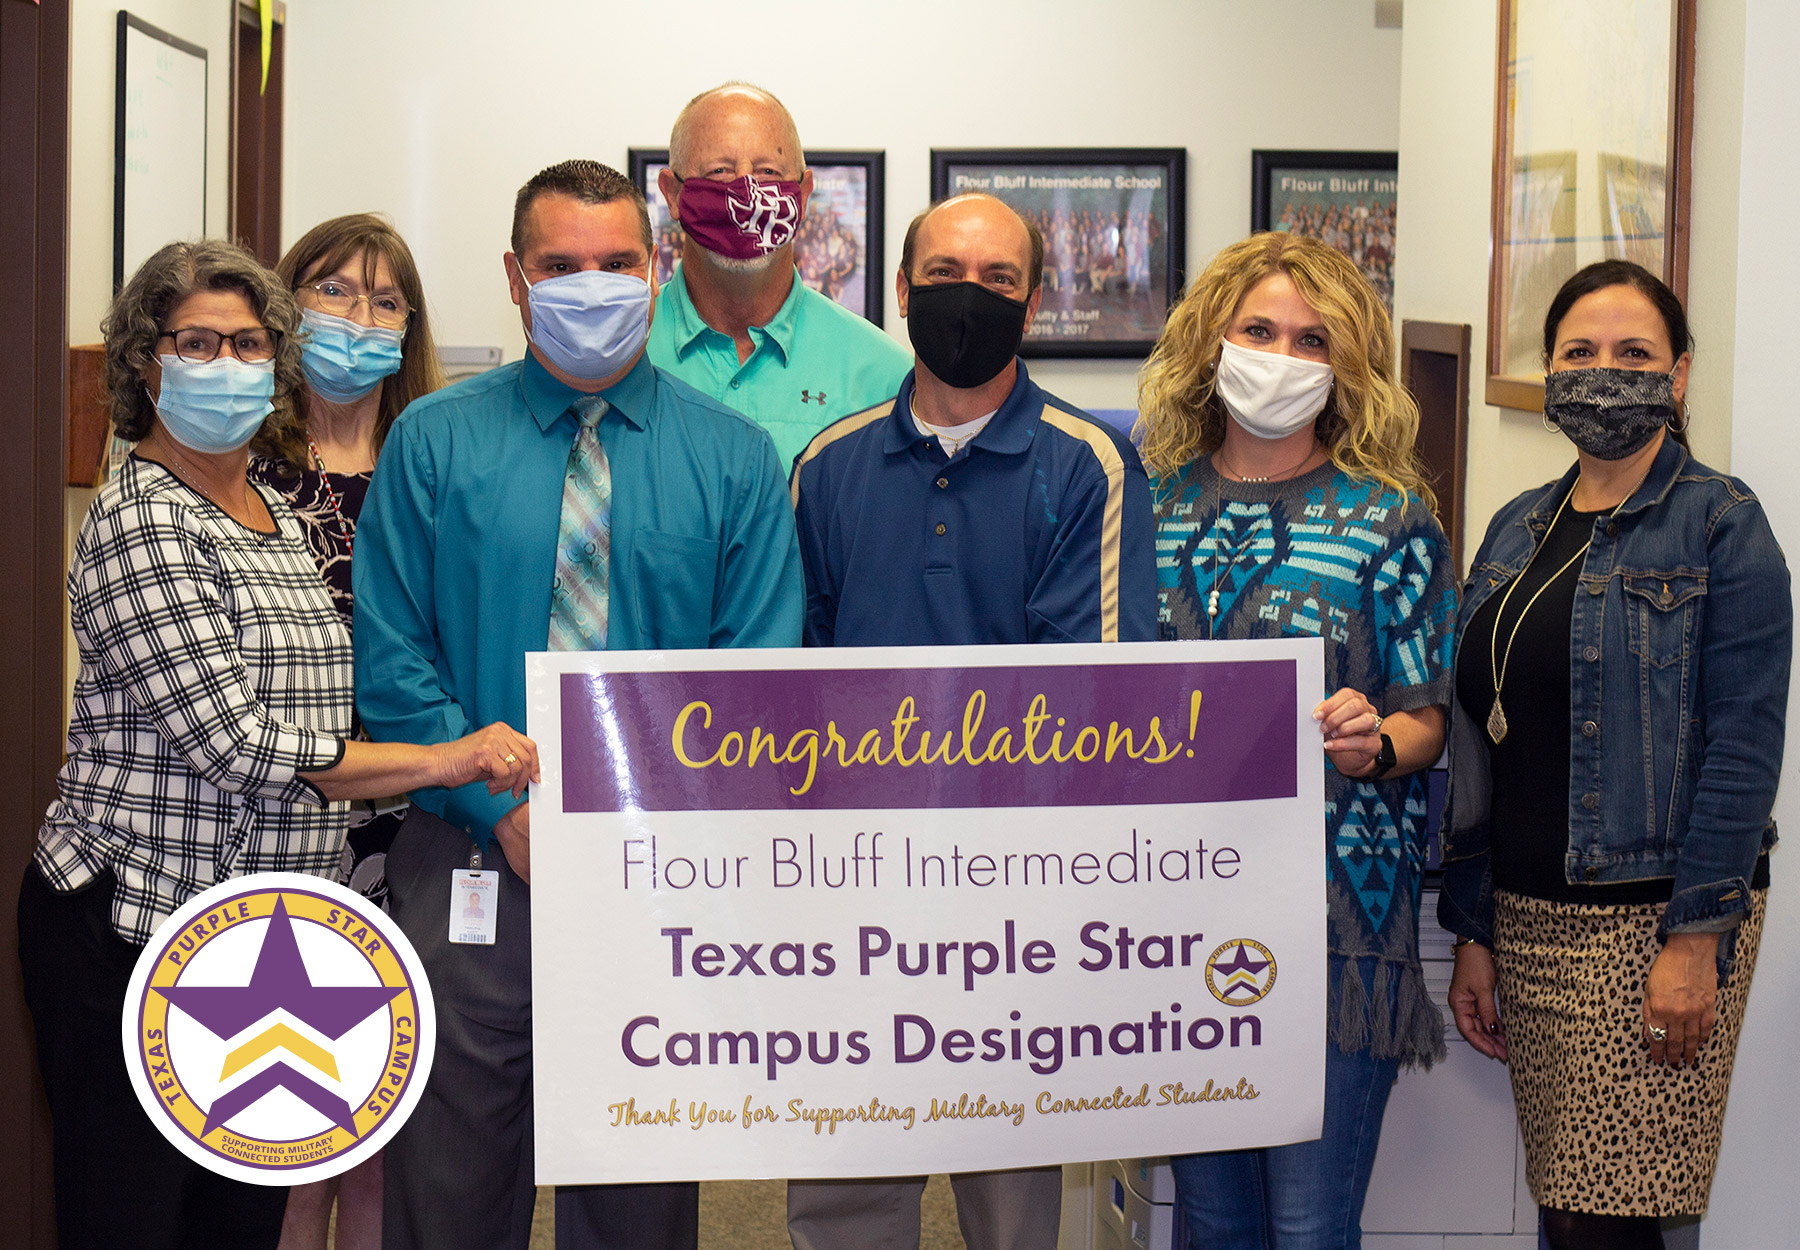 Flour Bluff Intermediate receives statewide designation as a Texas Purple Star Campus